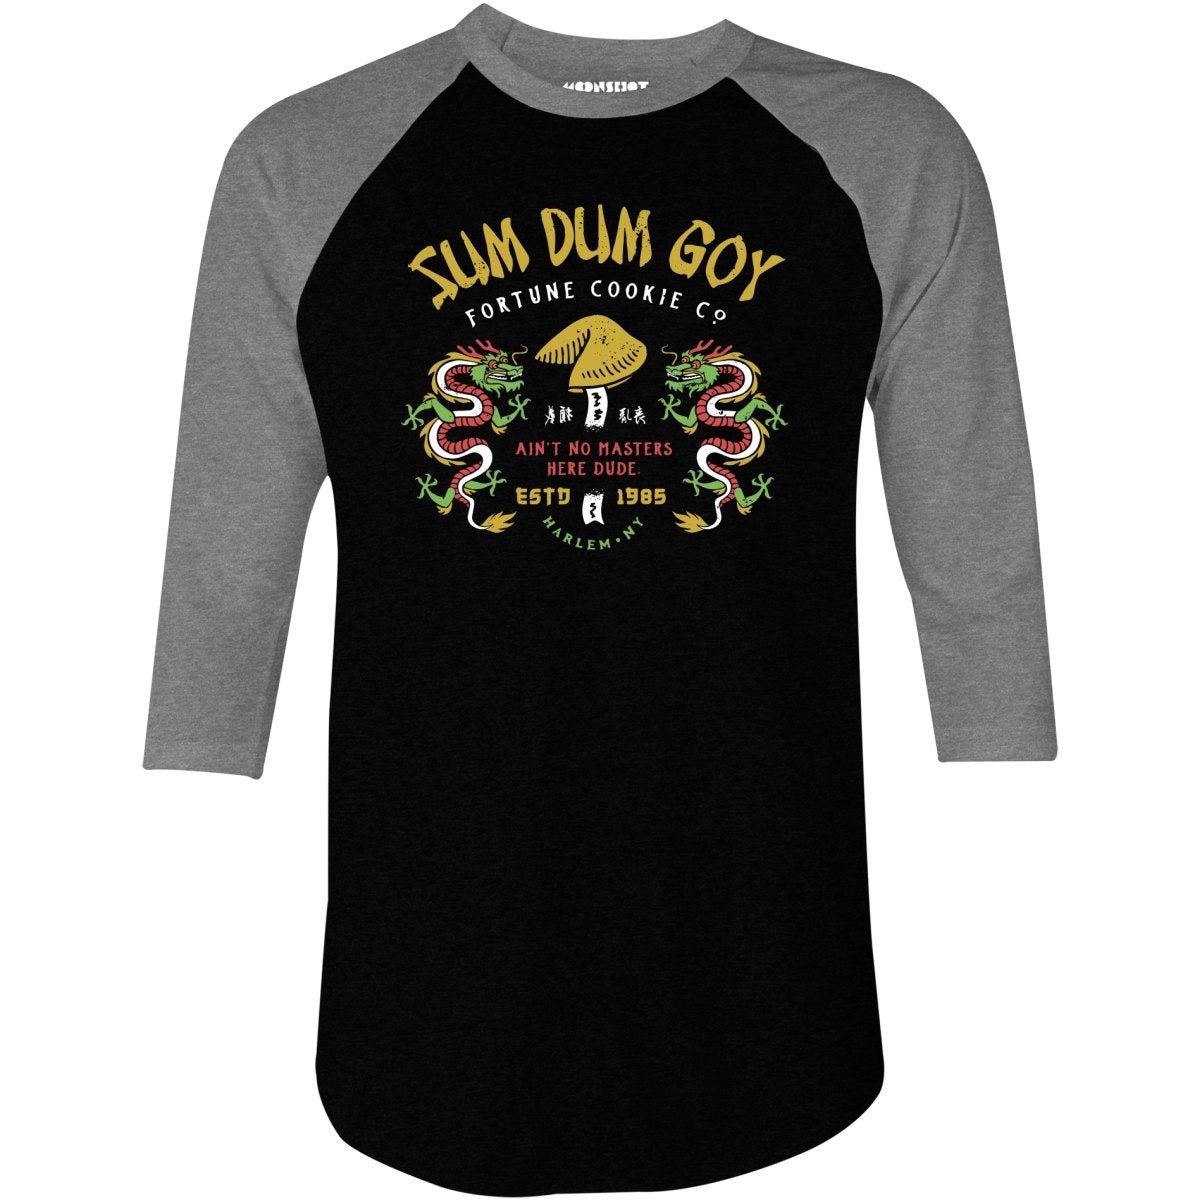 Sum Dum Goy Fortune Cookie Co. - Last Dragon - 3/4 Sleeve Raglan T-Shirt